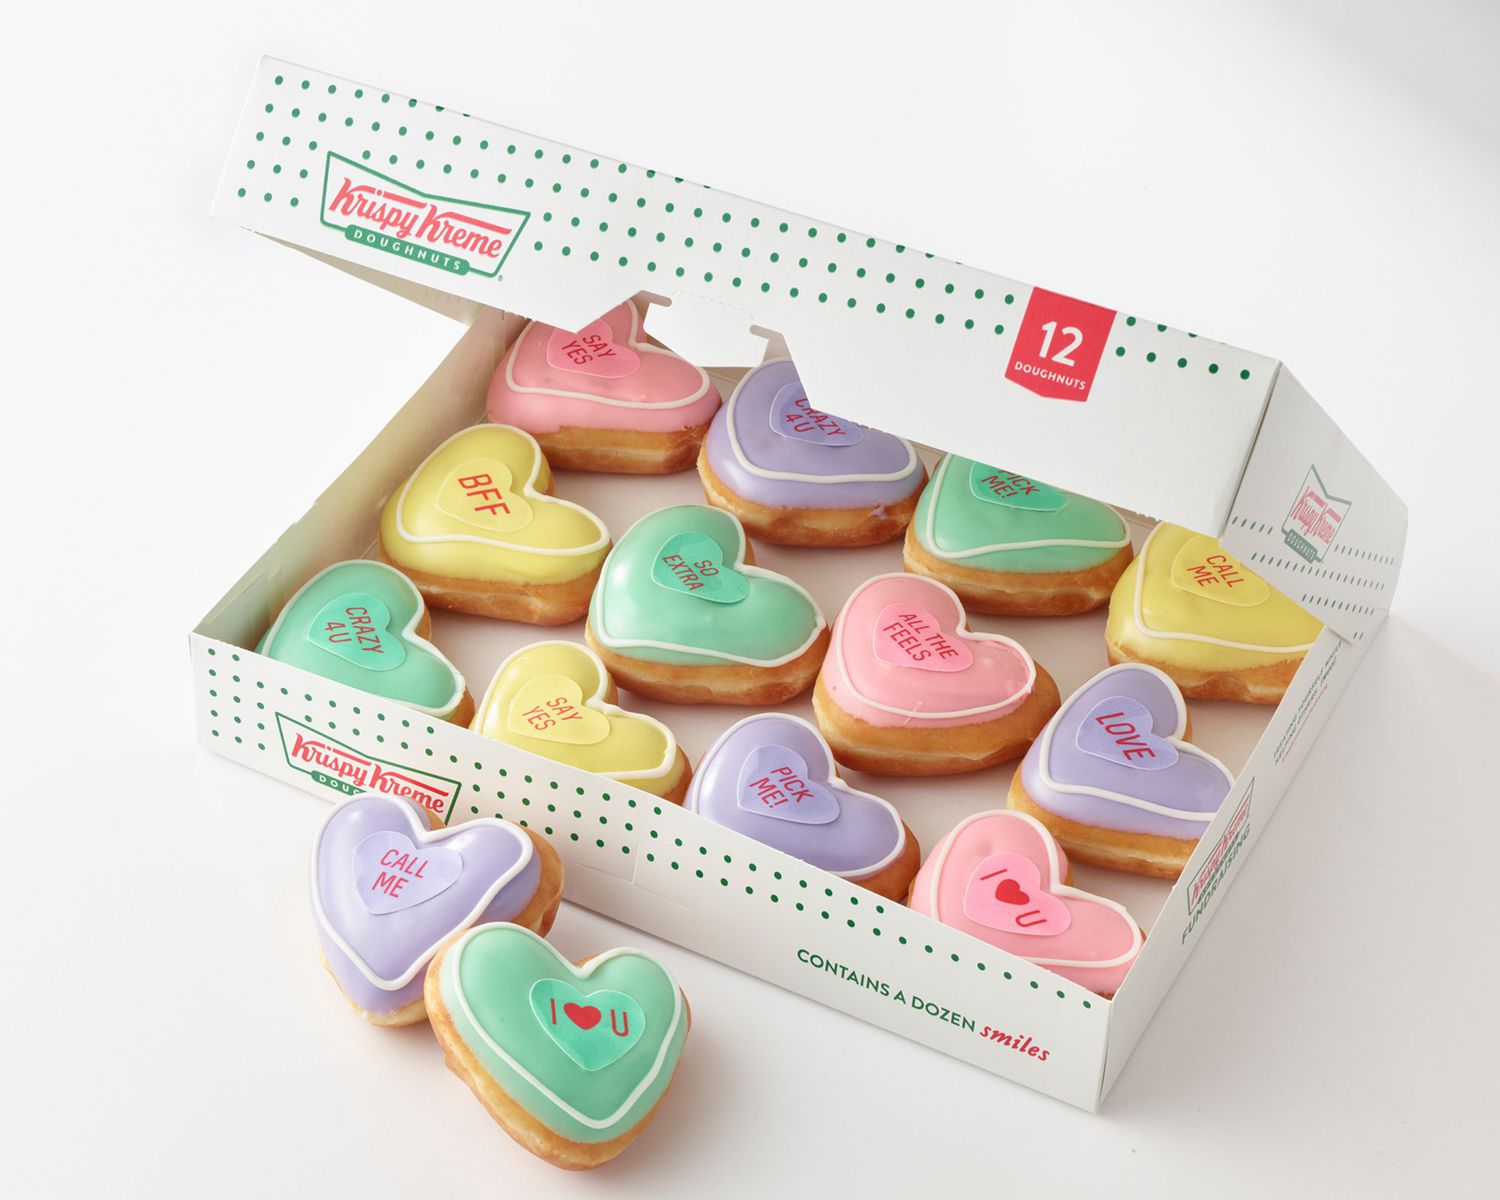 Krispy Kreme's Valentine Conversation Doughnuts